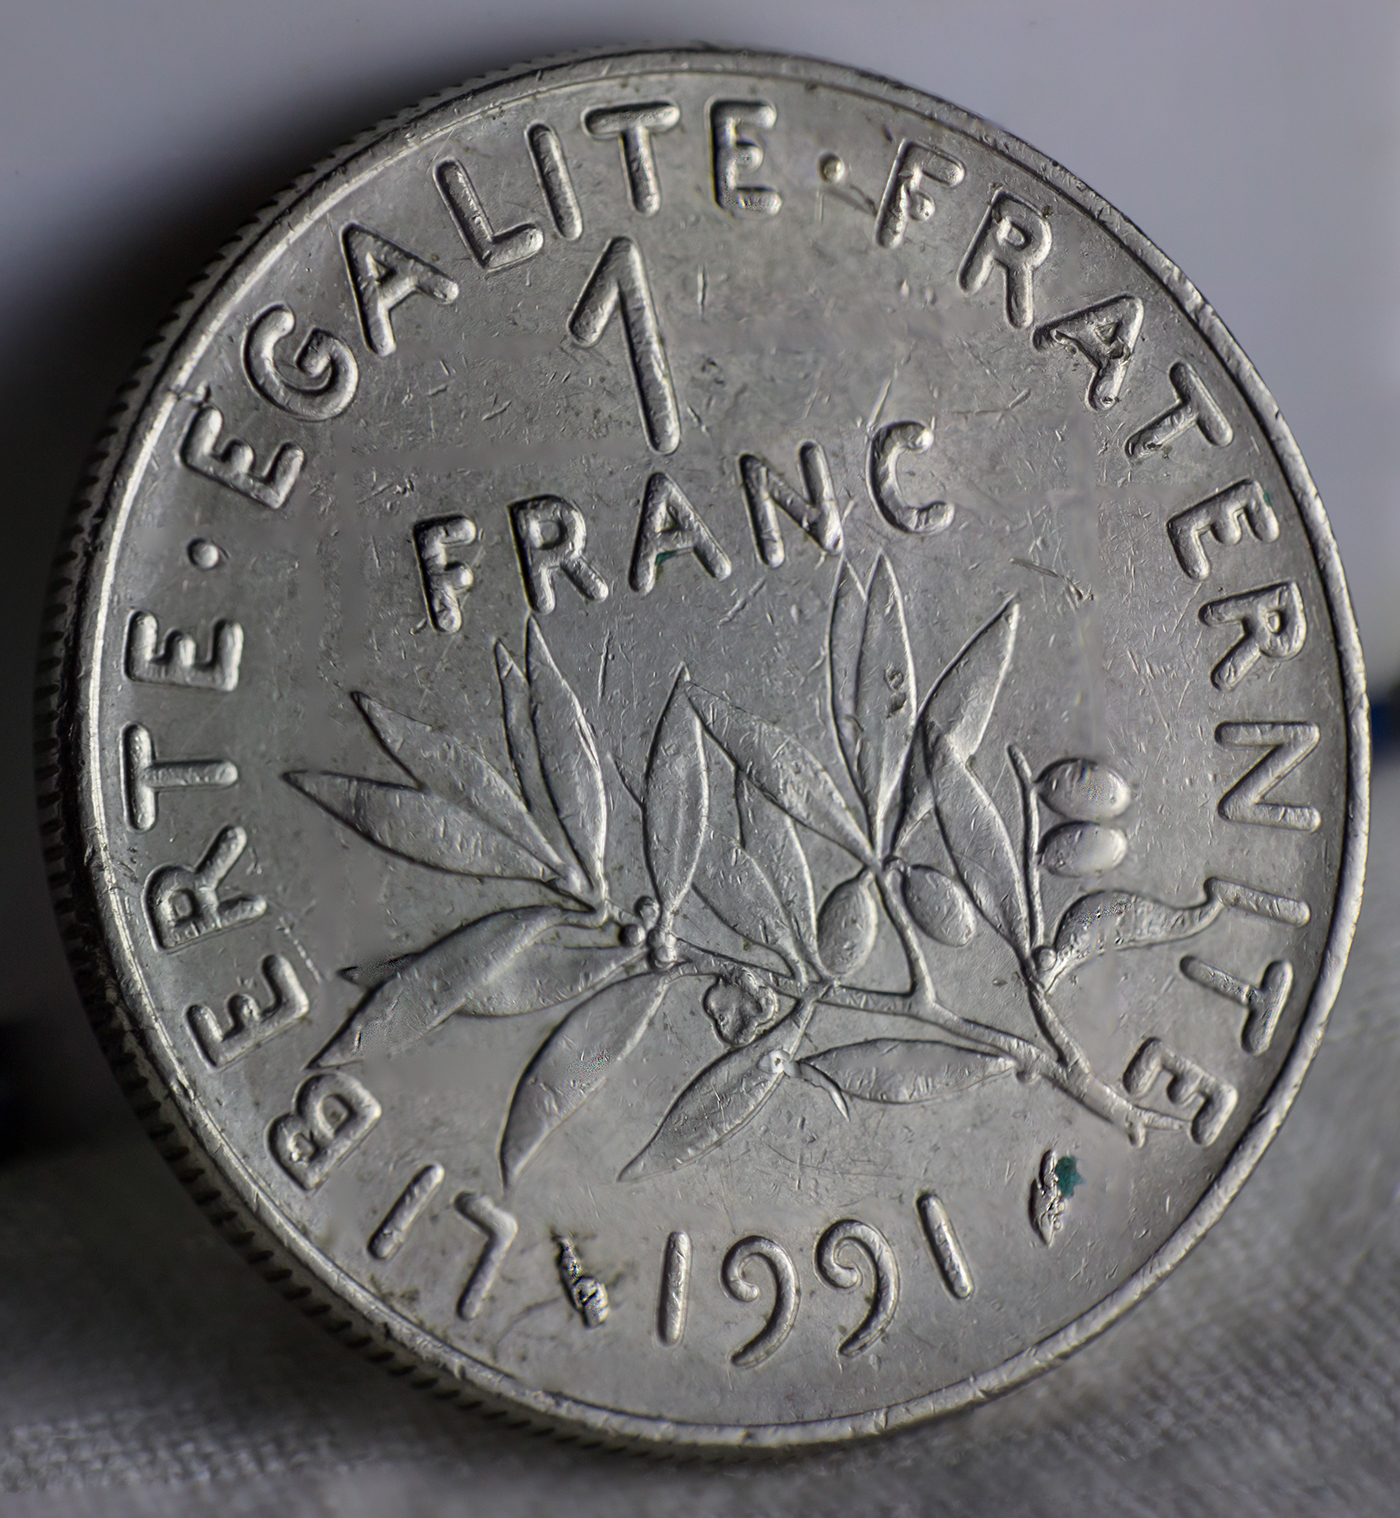 Old French Franc France - Macro Photography  digital Editing  photoshopcc